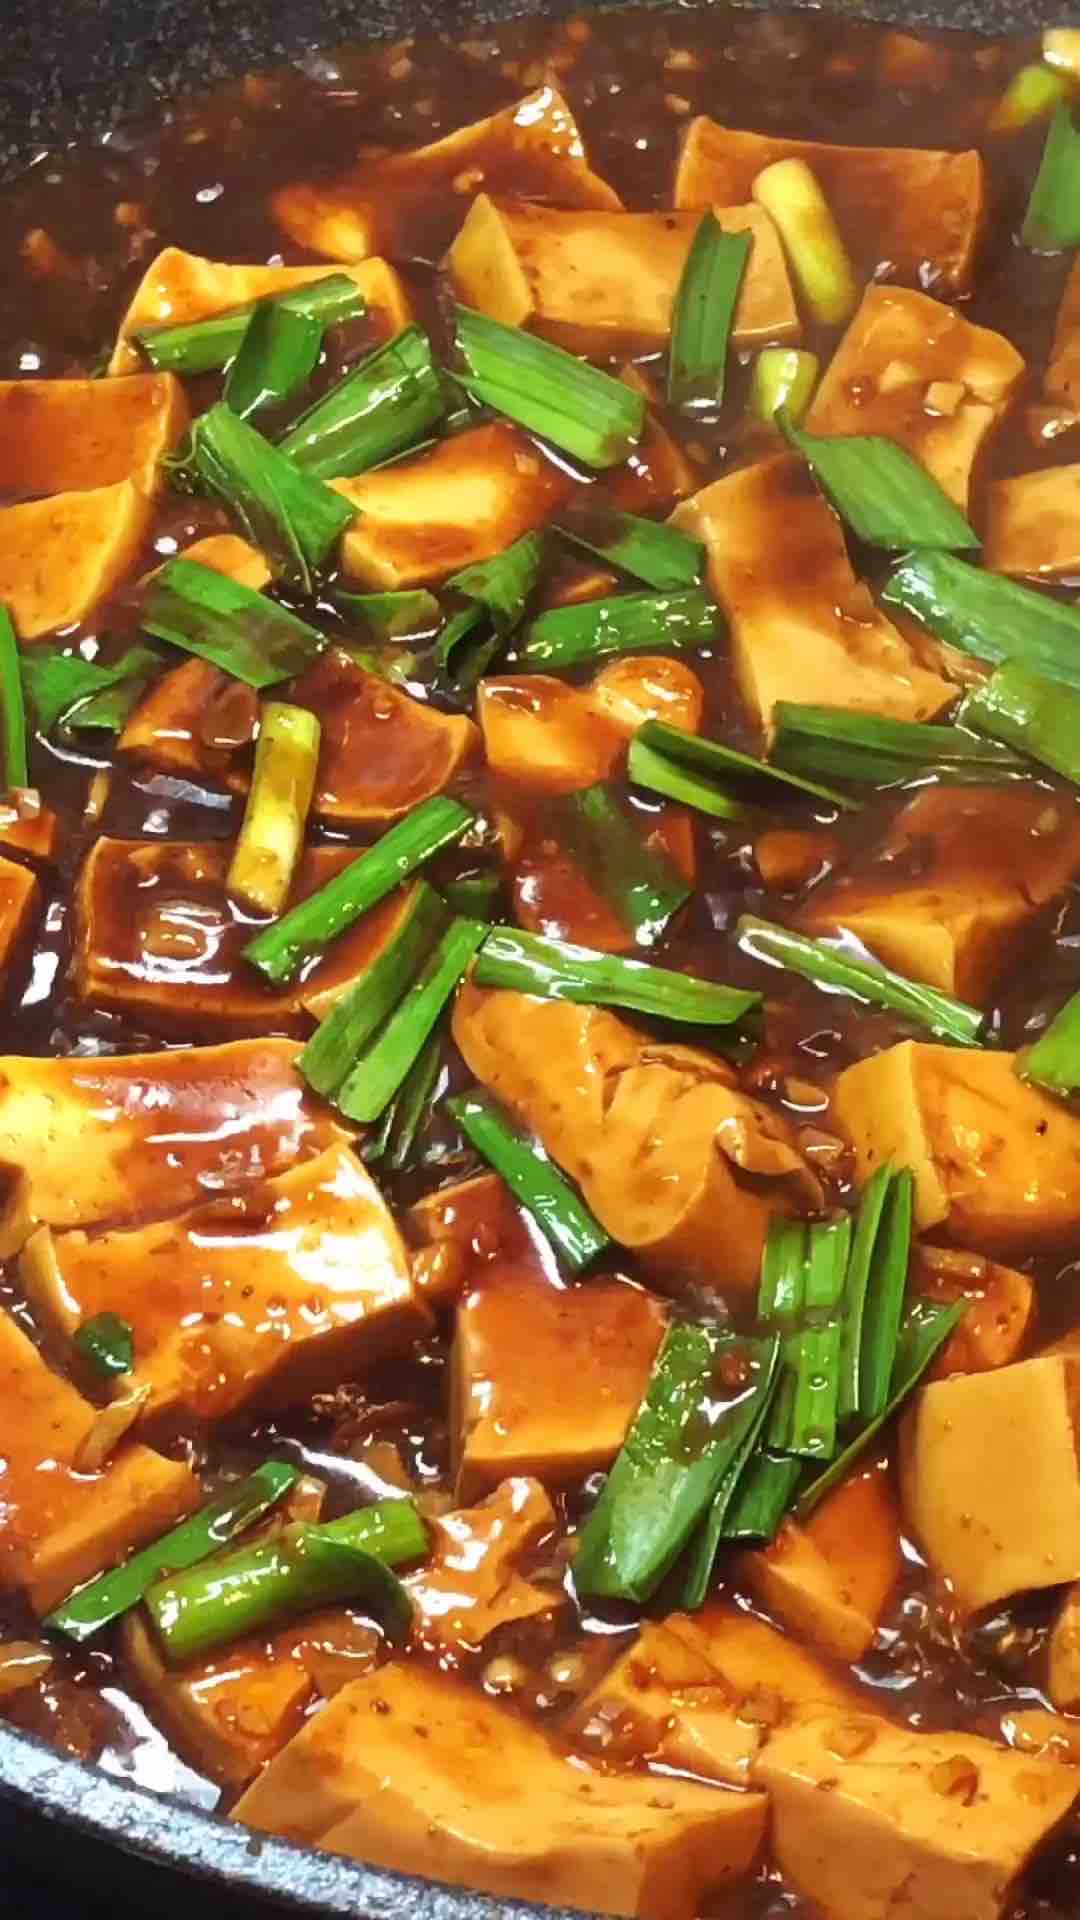 Flavored Tofu